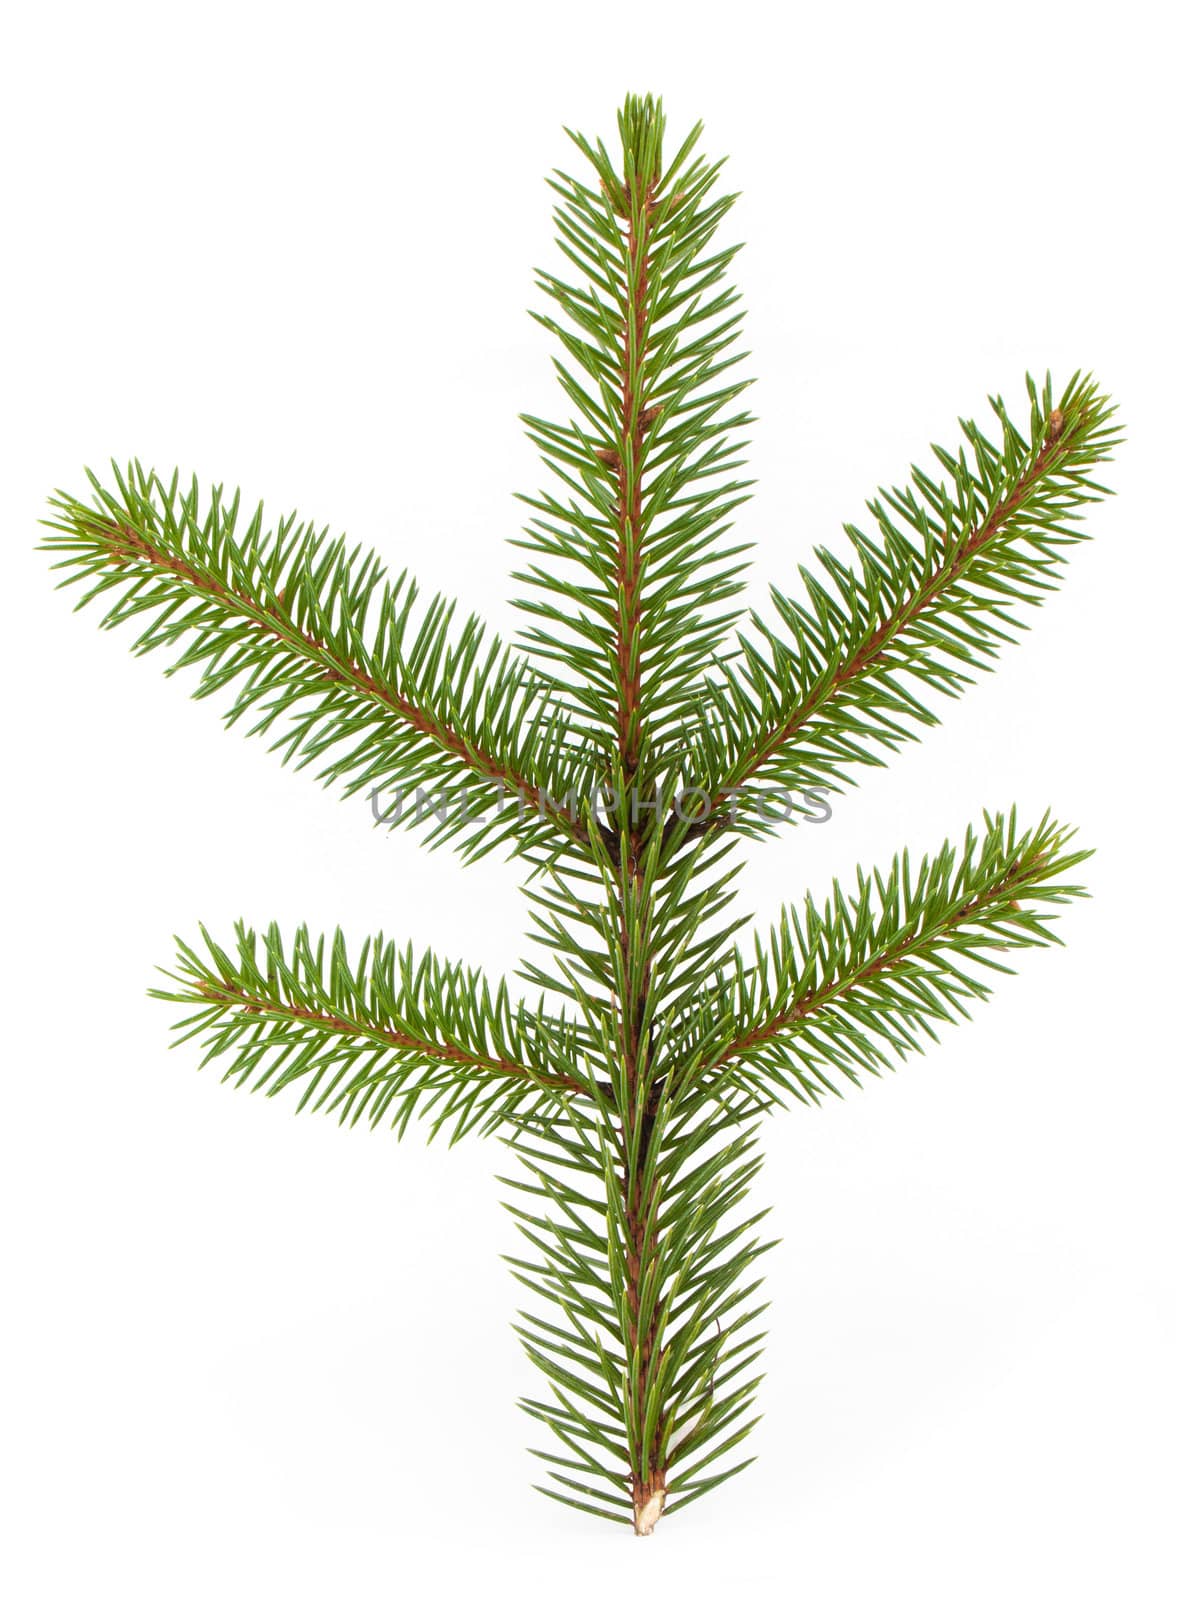 Pine tree branch by vtorous